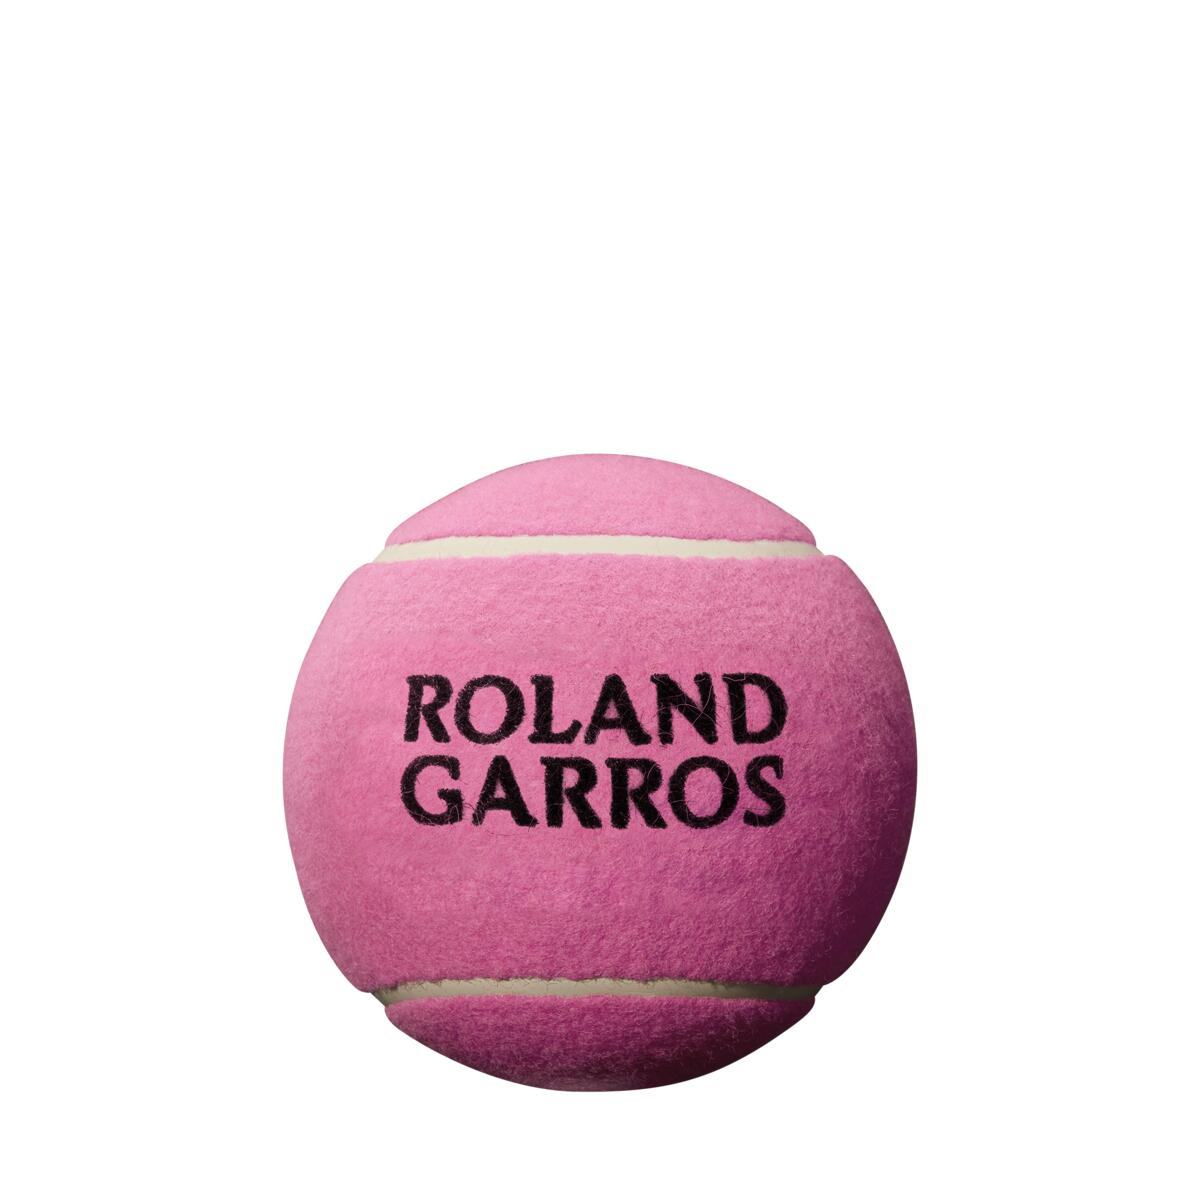 Les balles de tennis de Wimbledon recyclées en mini-enceintes